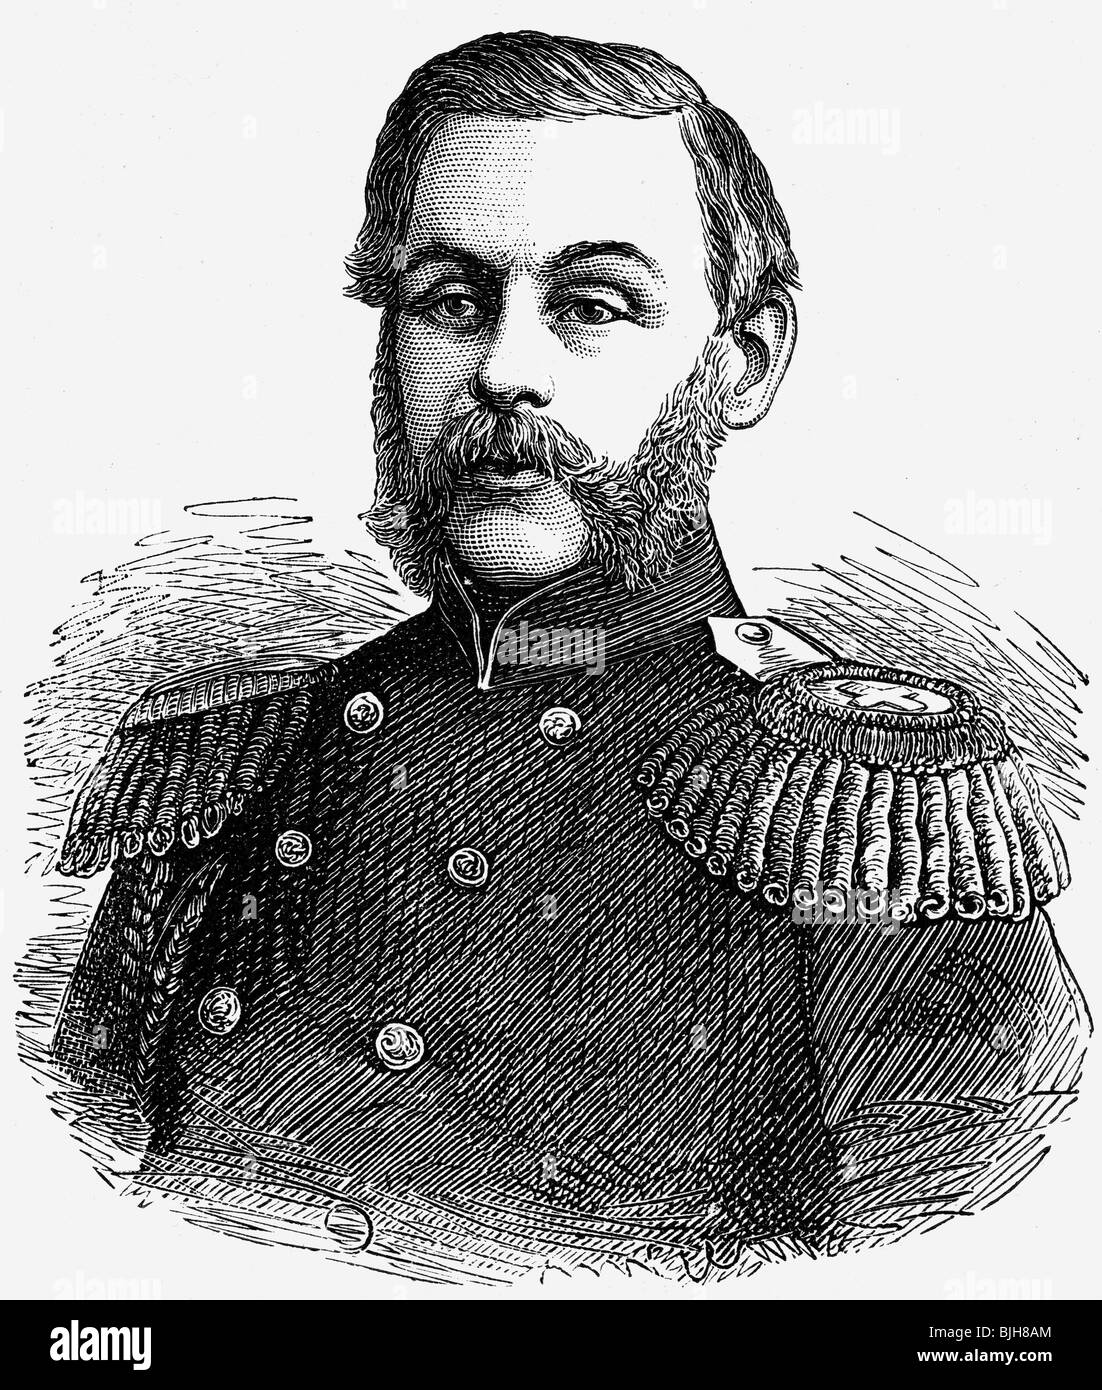 Milyutin, Dmitry Alekseyevich, 28.6.1916 - 25.1.1912, Russian general, Minister of War 16.5.1861 - 21.5.1881, portrait, wood engraving, circa 1865, , Stock Photo